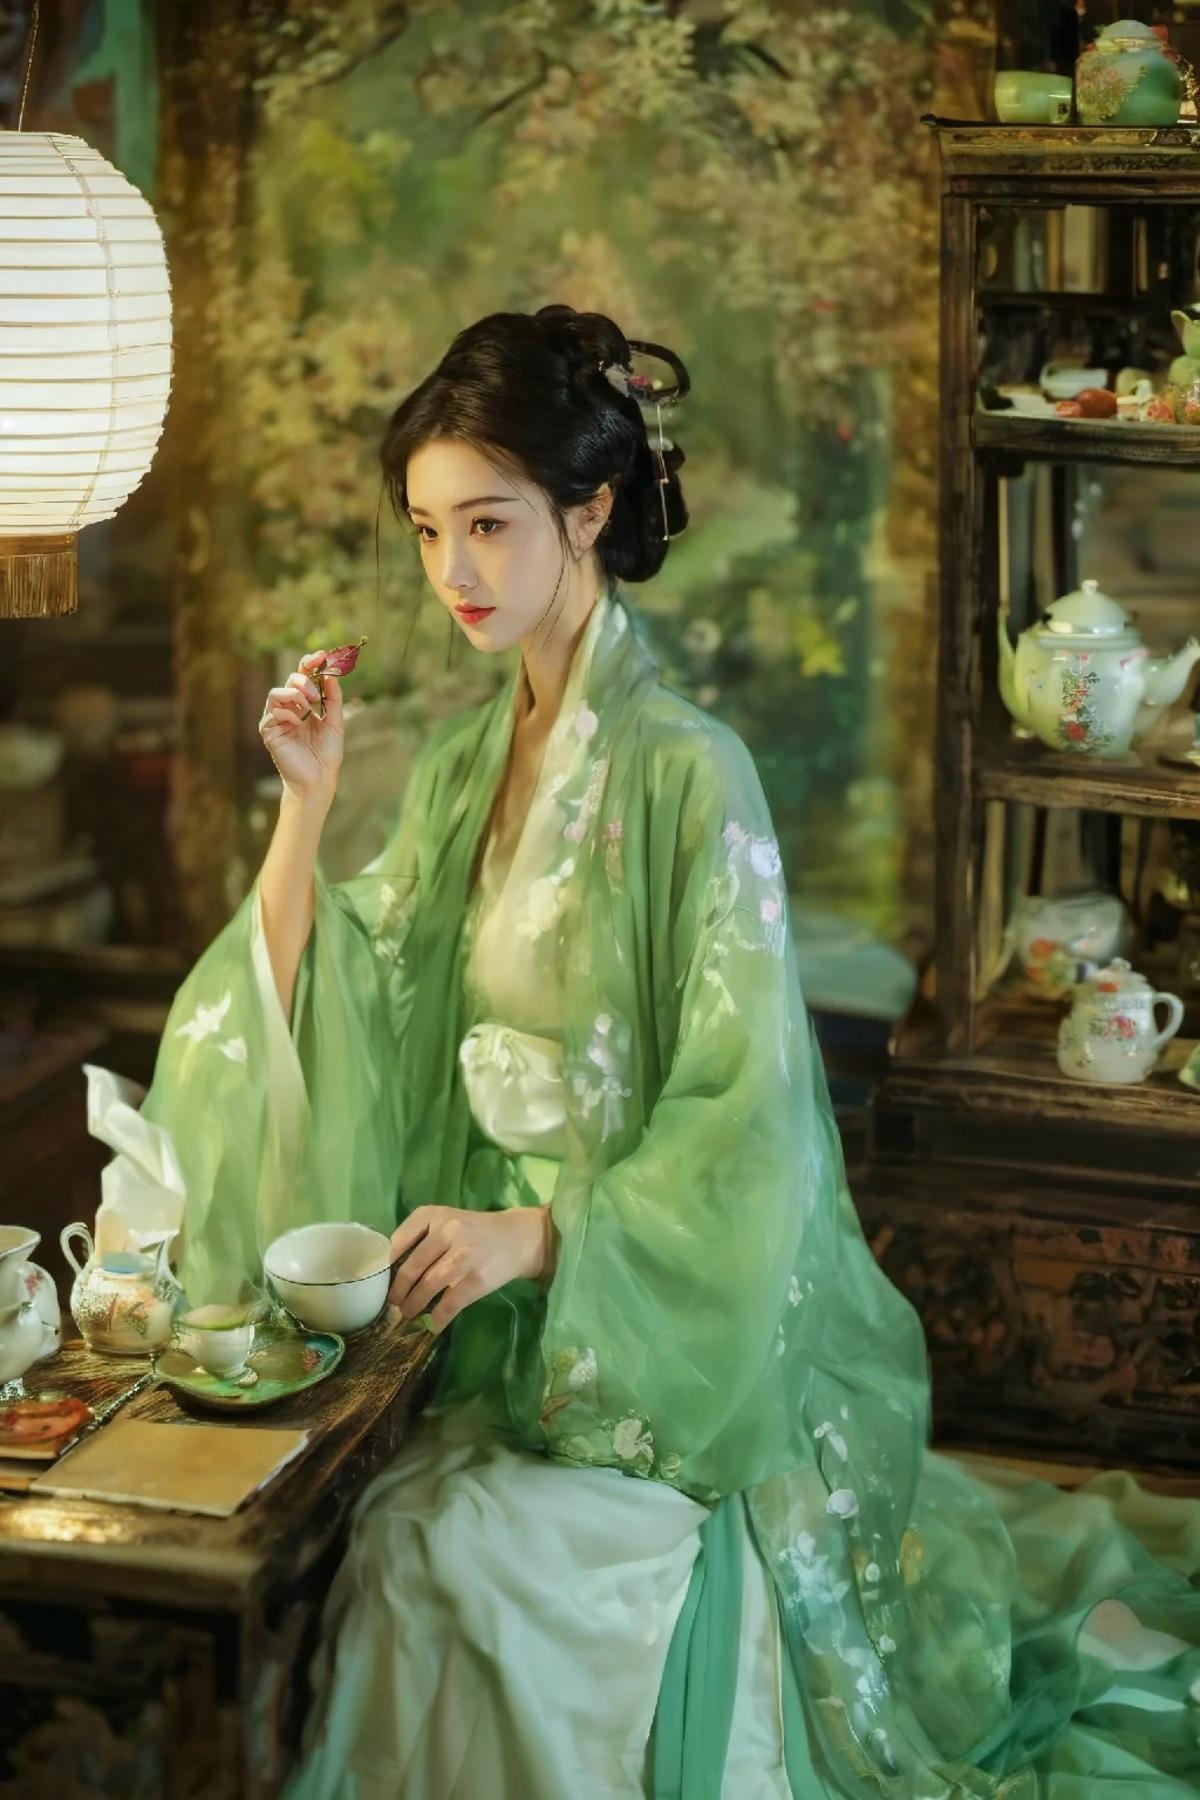 (8k, RAW photo, best quality,masterpiece:1.2),(realistic, photo-realistic:1.37)
Tea house, teapot, teacup, green